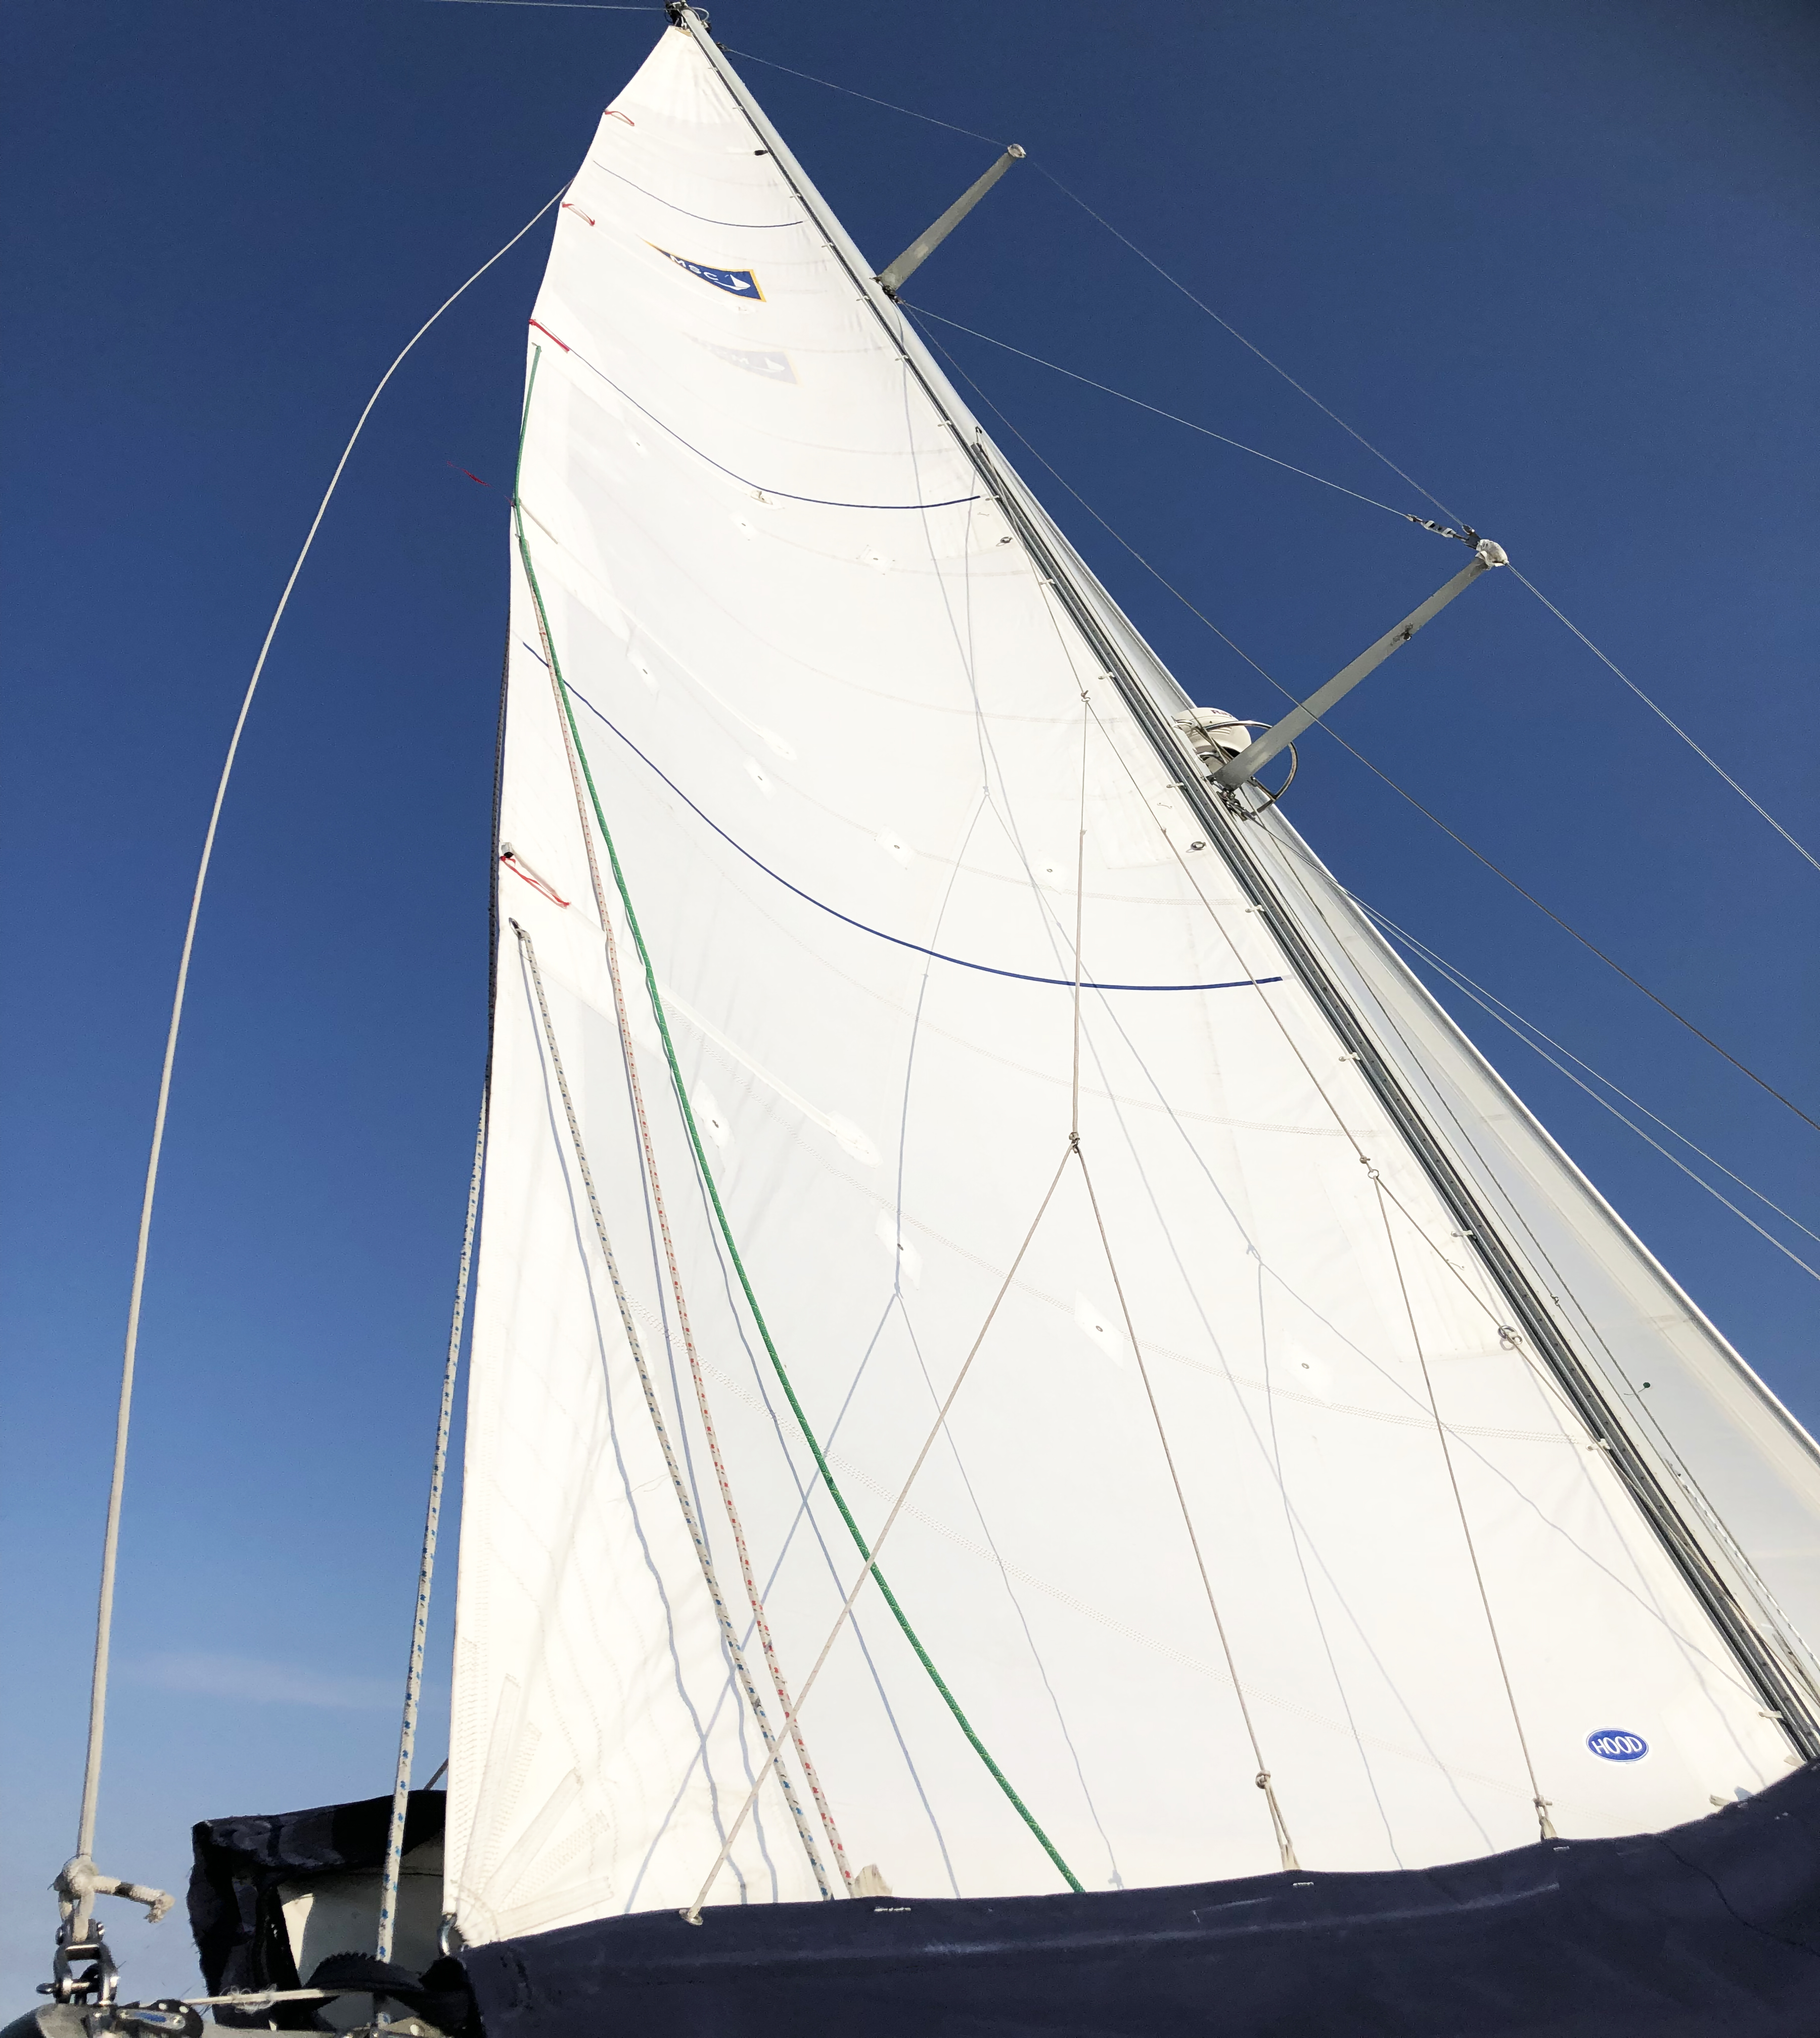 raising the mainsail on a sailboat